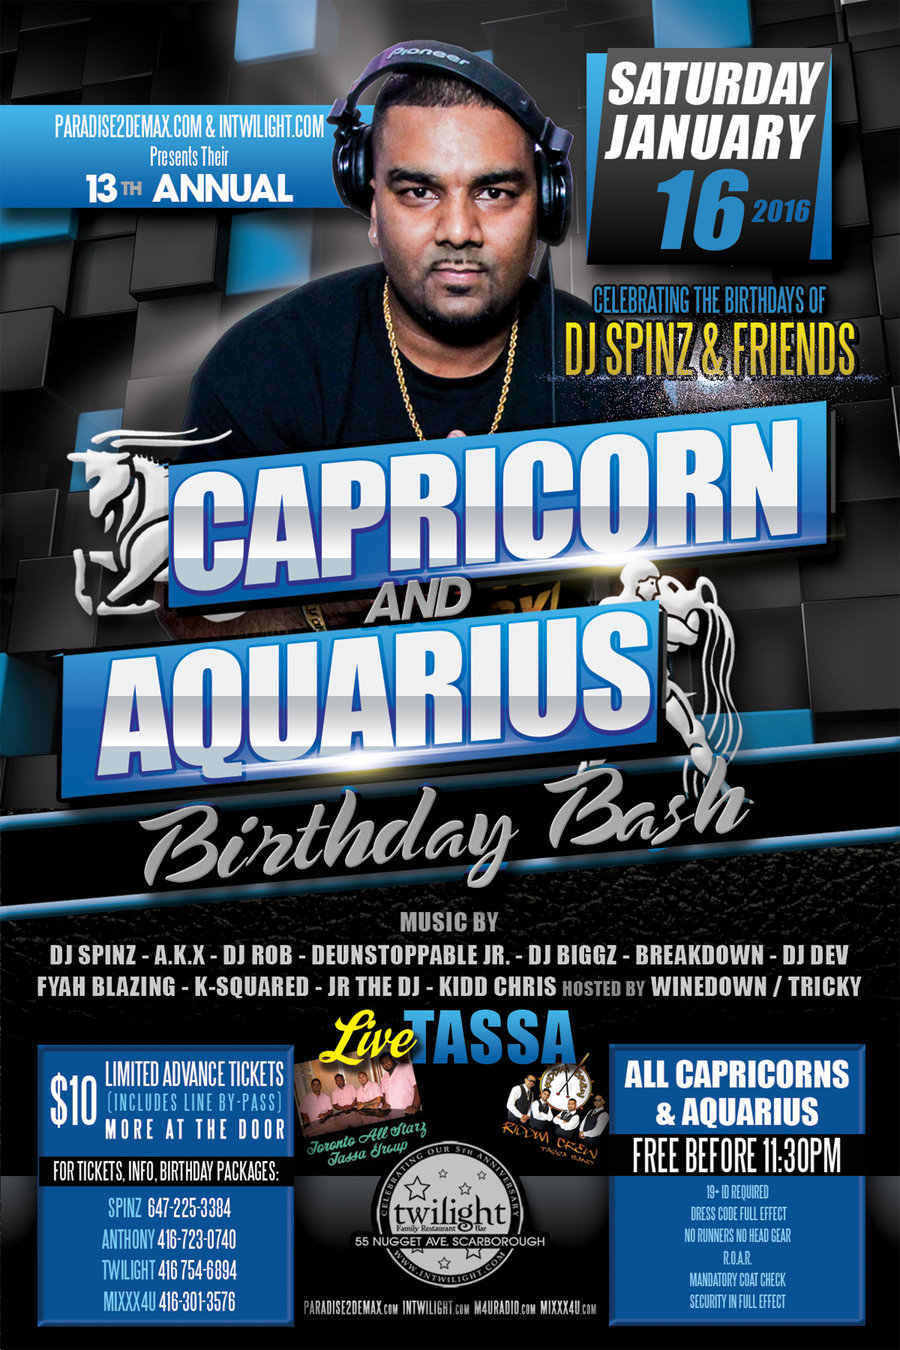 Capricorn And Aquarius Birthday Bash